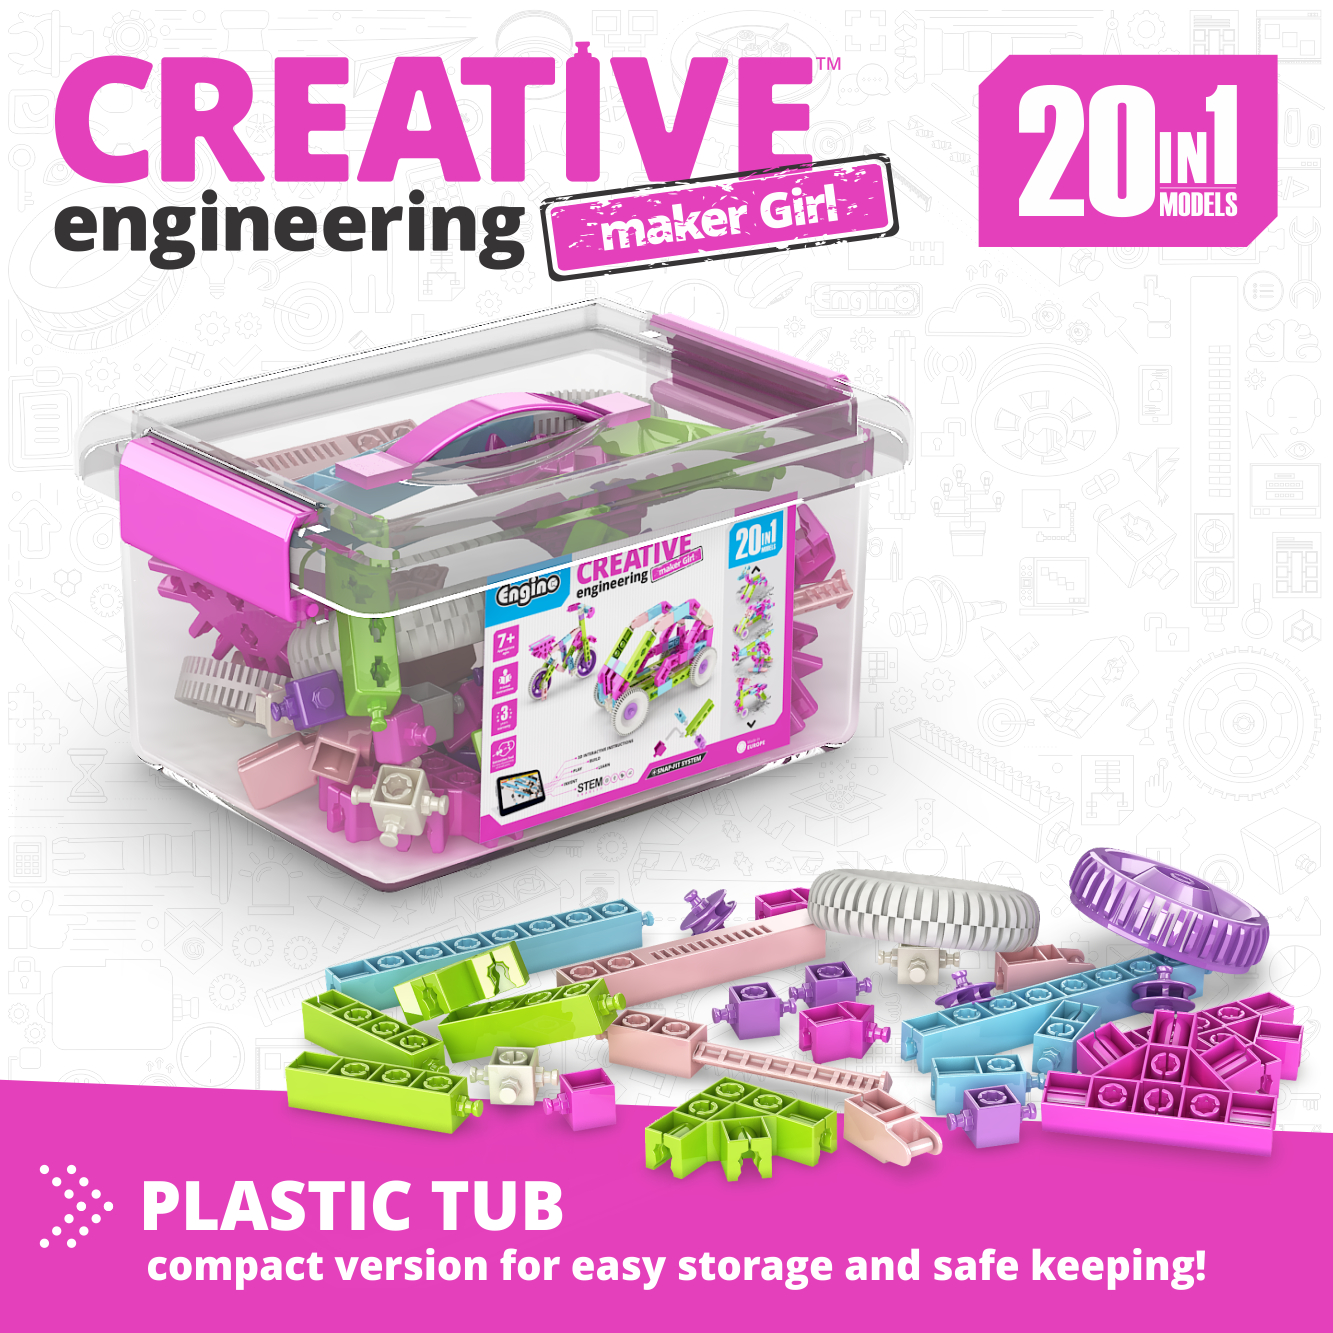 Creative Engineering 20 in 1 Maker Girl Set